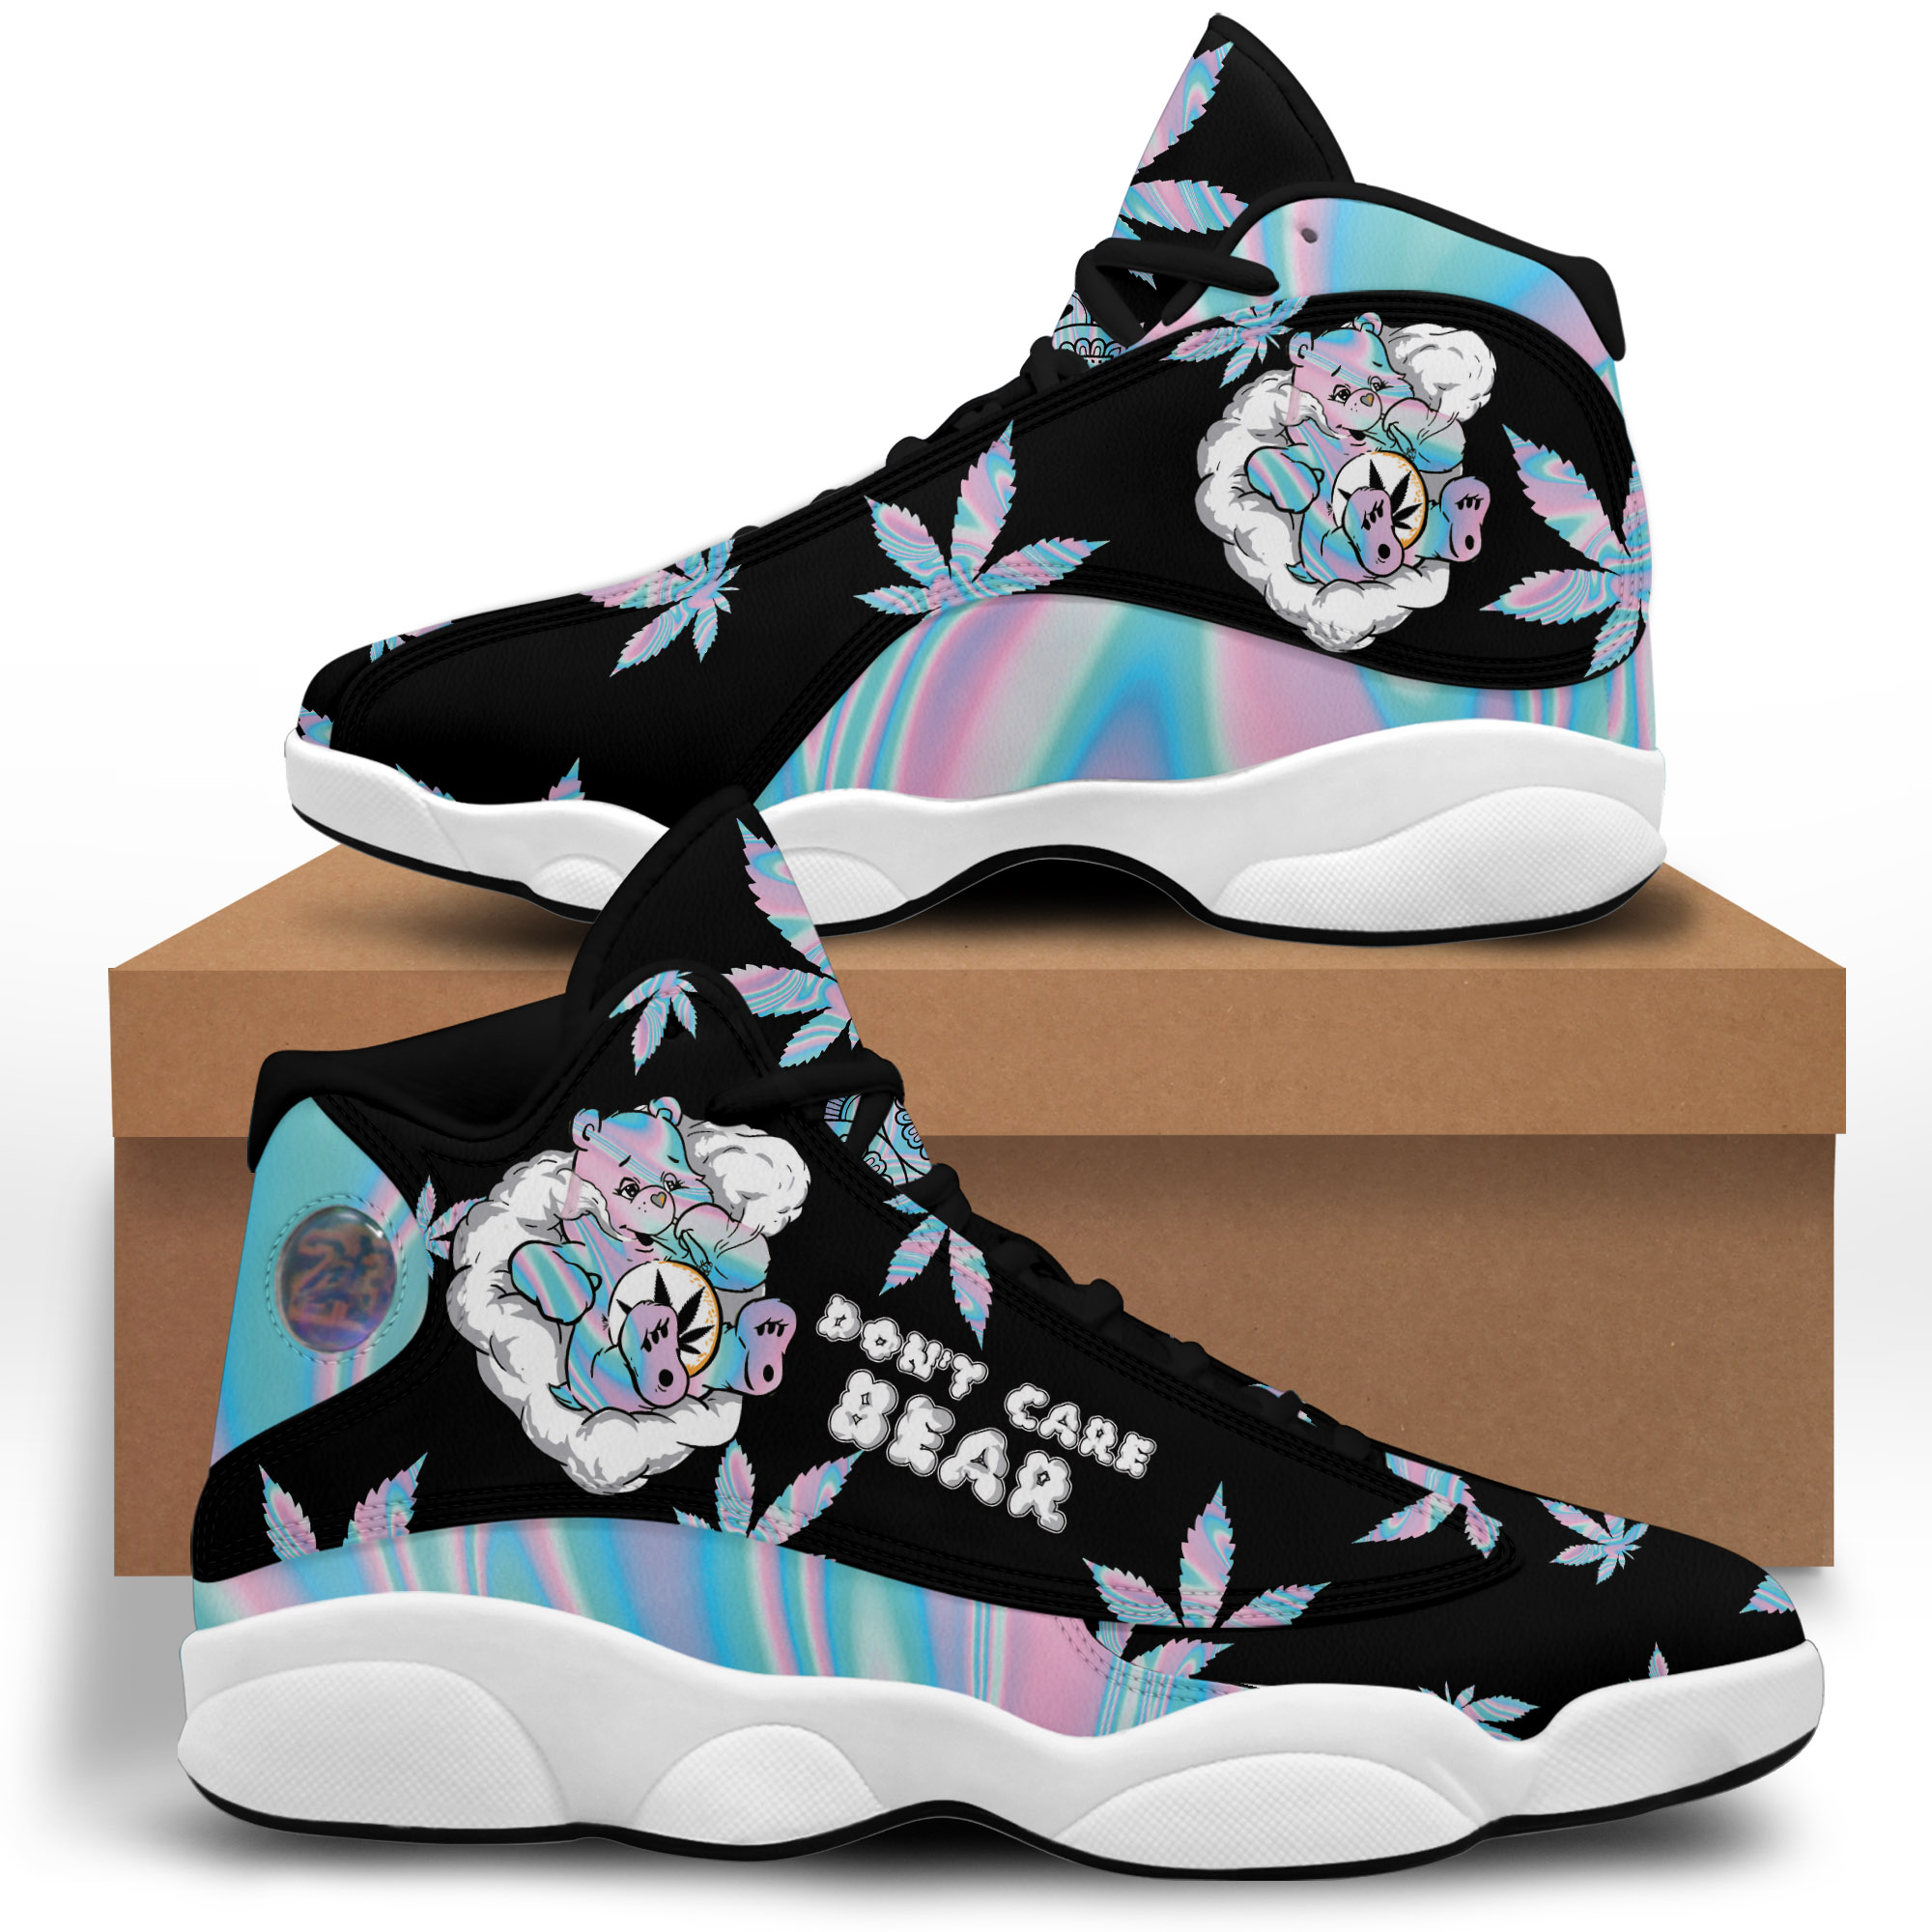 Bud Light Air Jordan 13 Sneakers Shoes